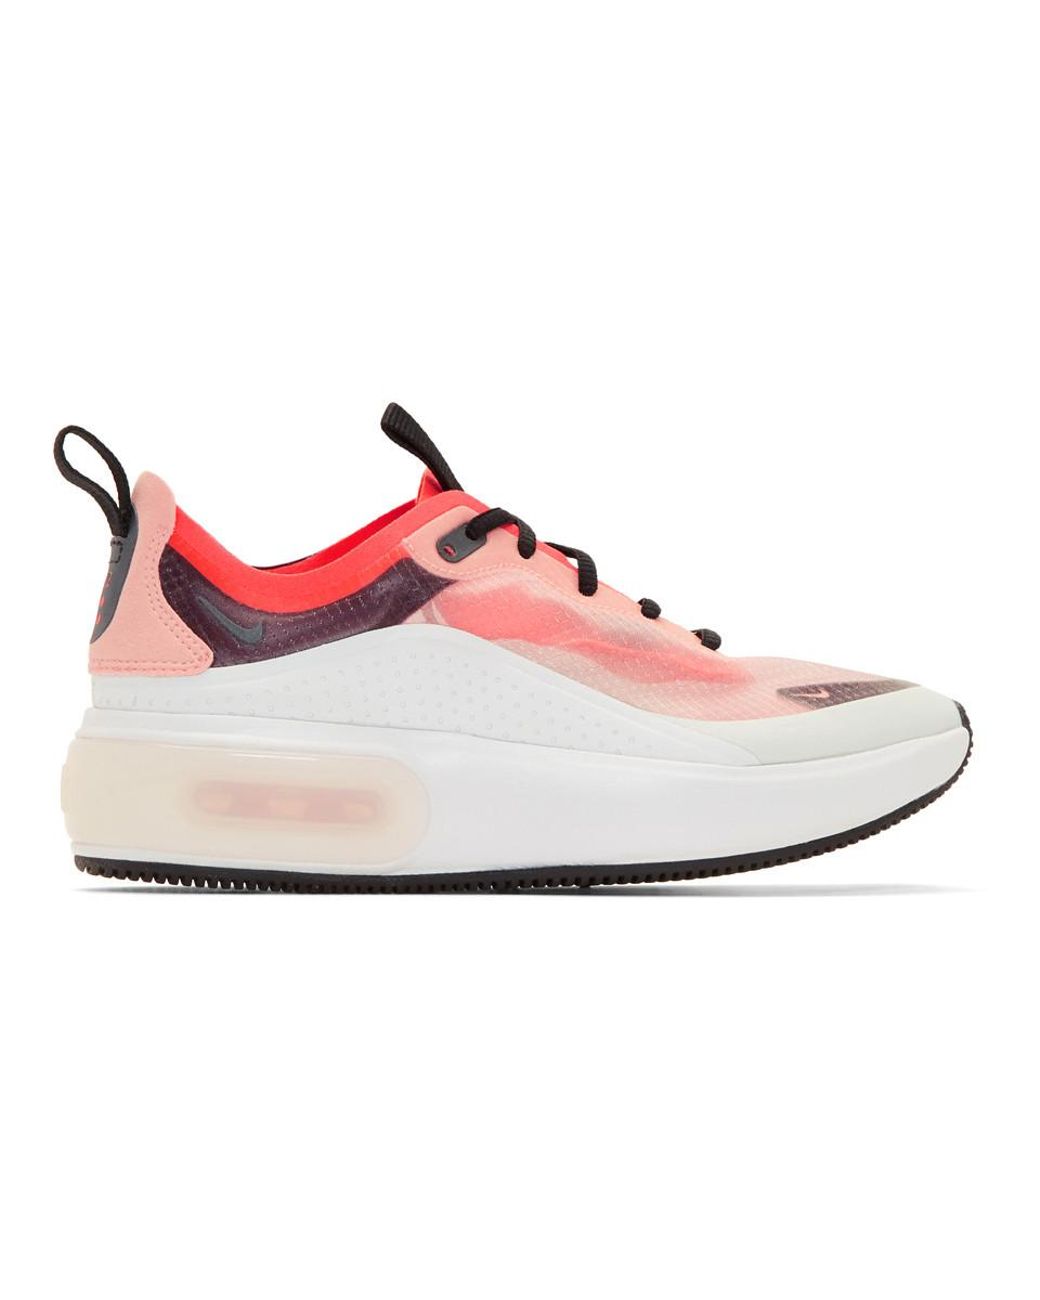 Nike Air Max Dia Se Qs Sneakers in Pink | Lyst